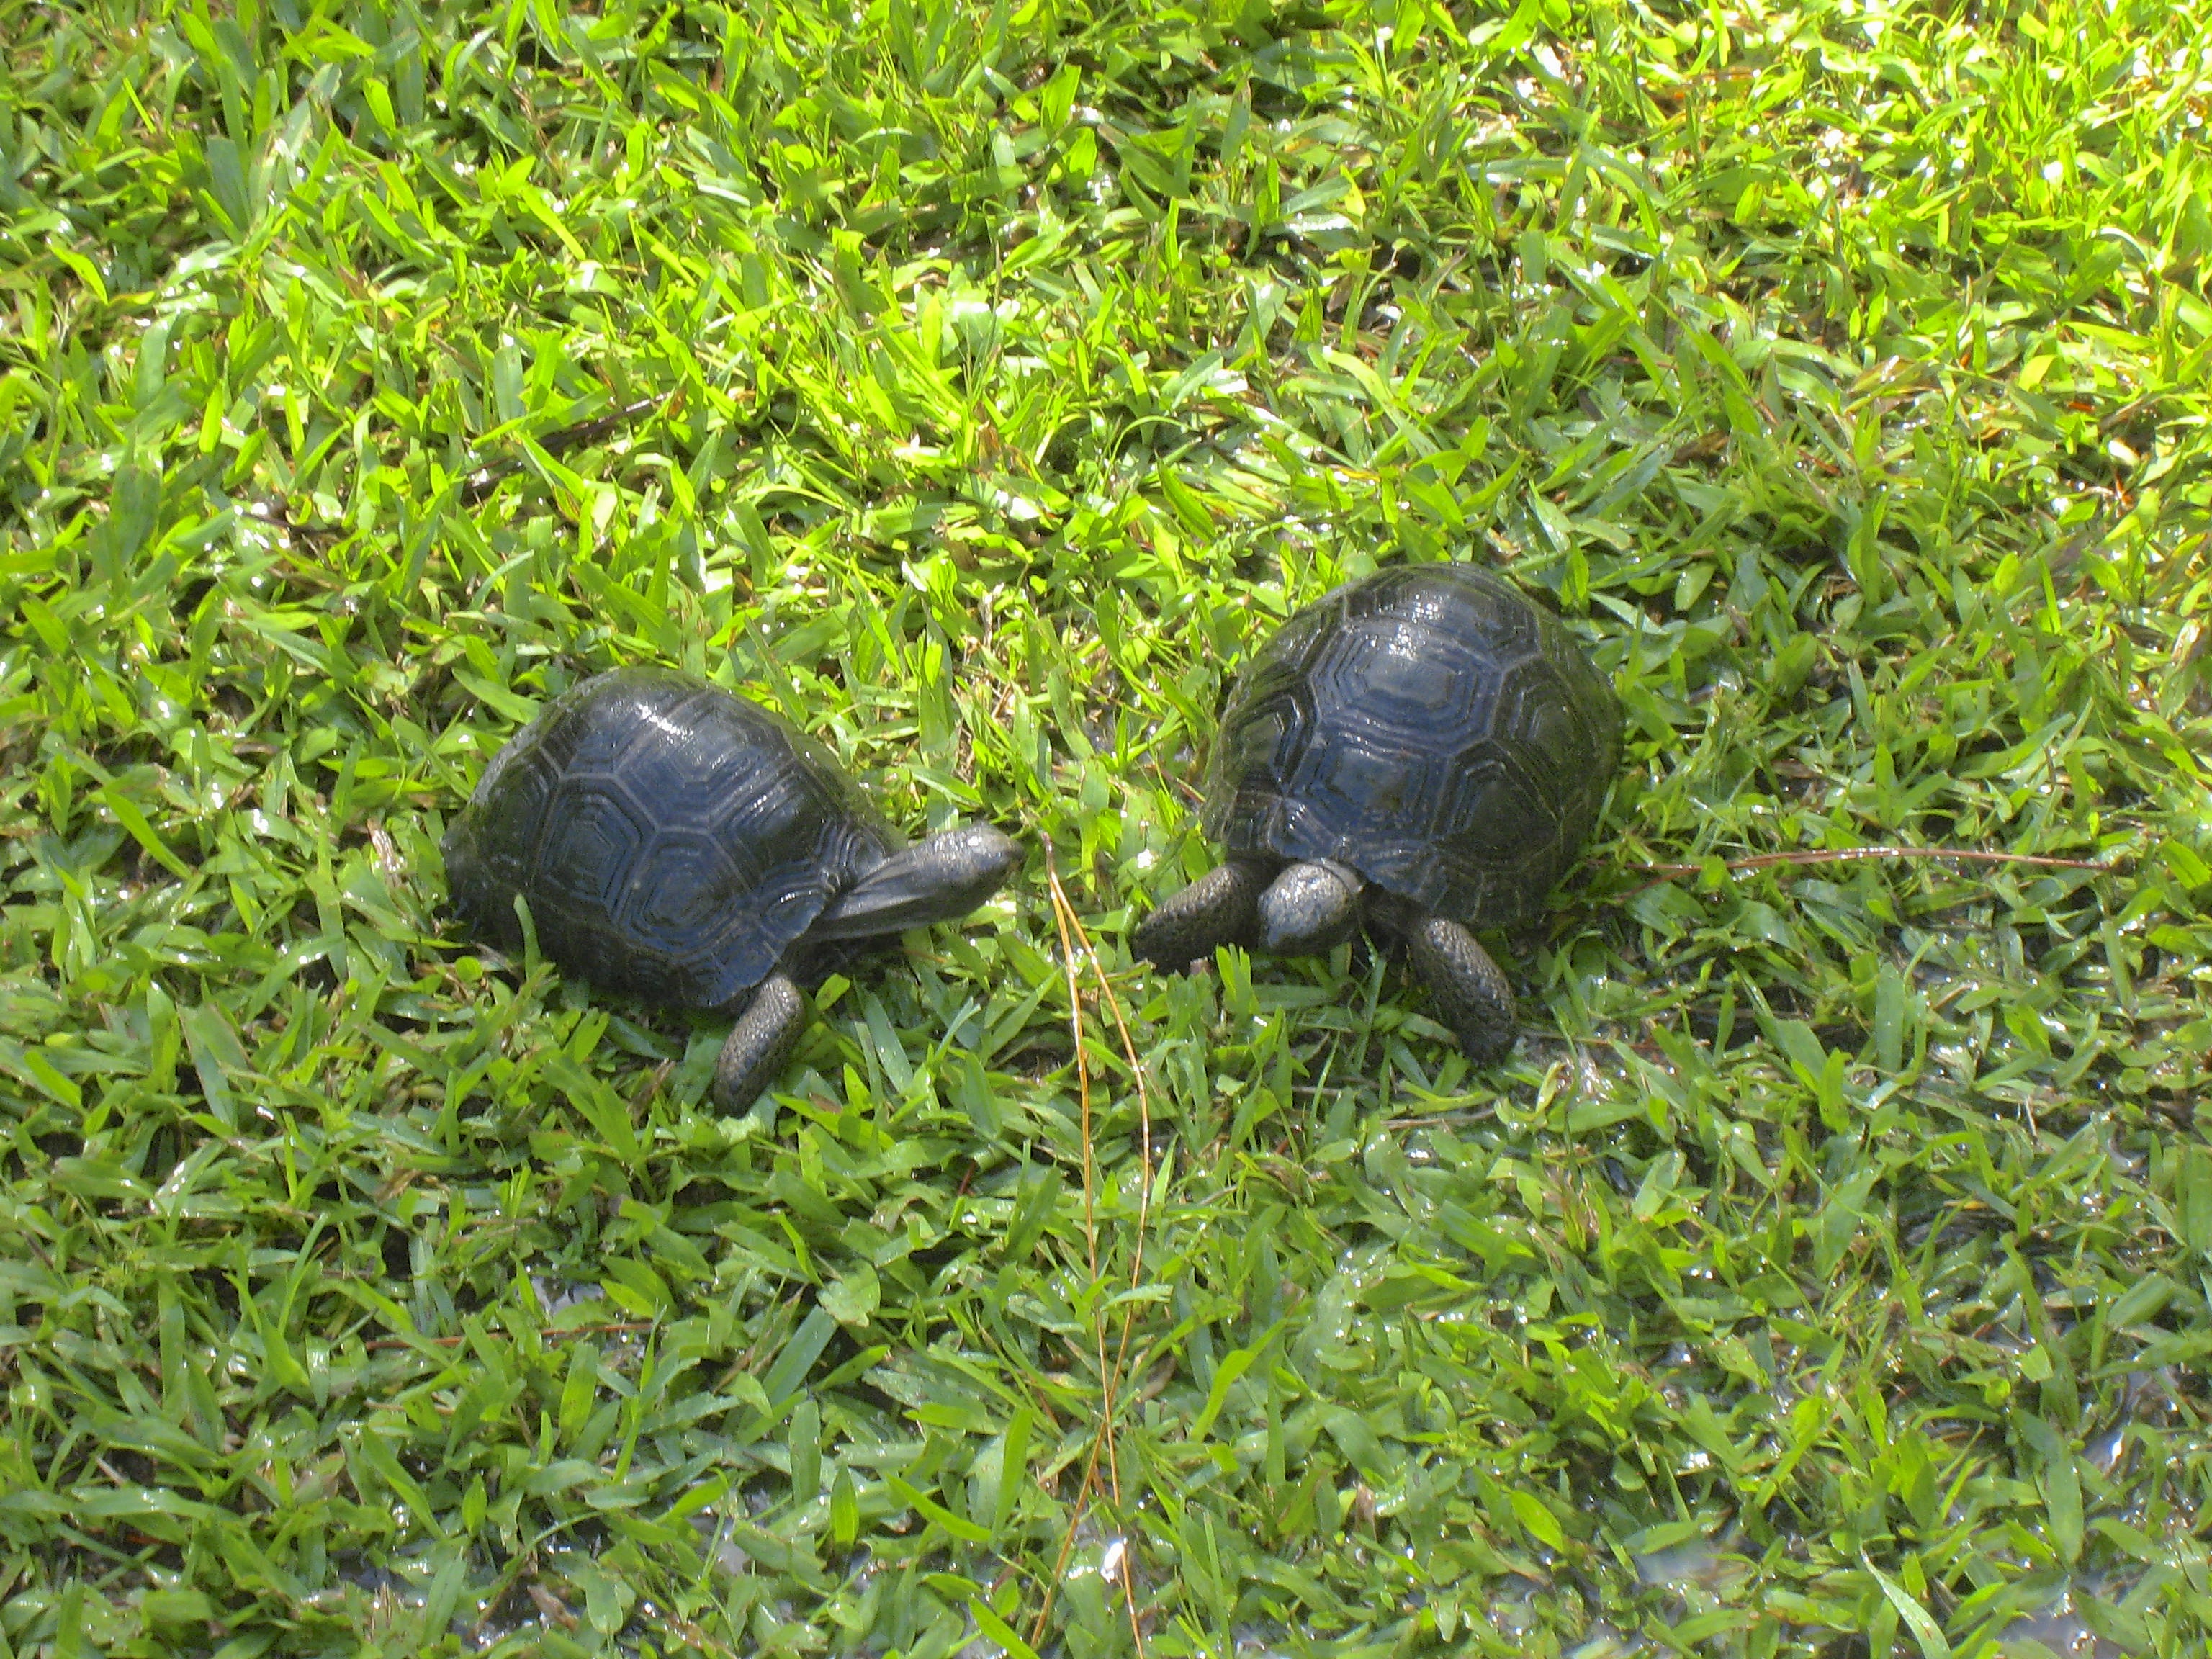 Young aldabra tortoises